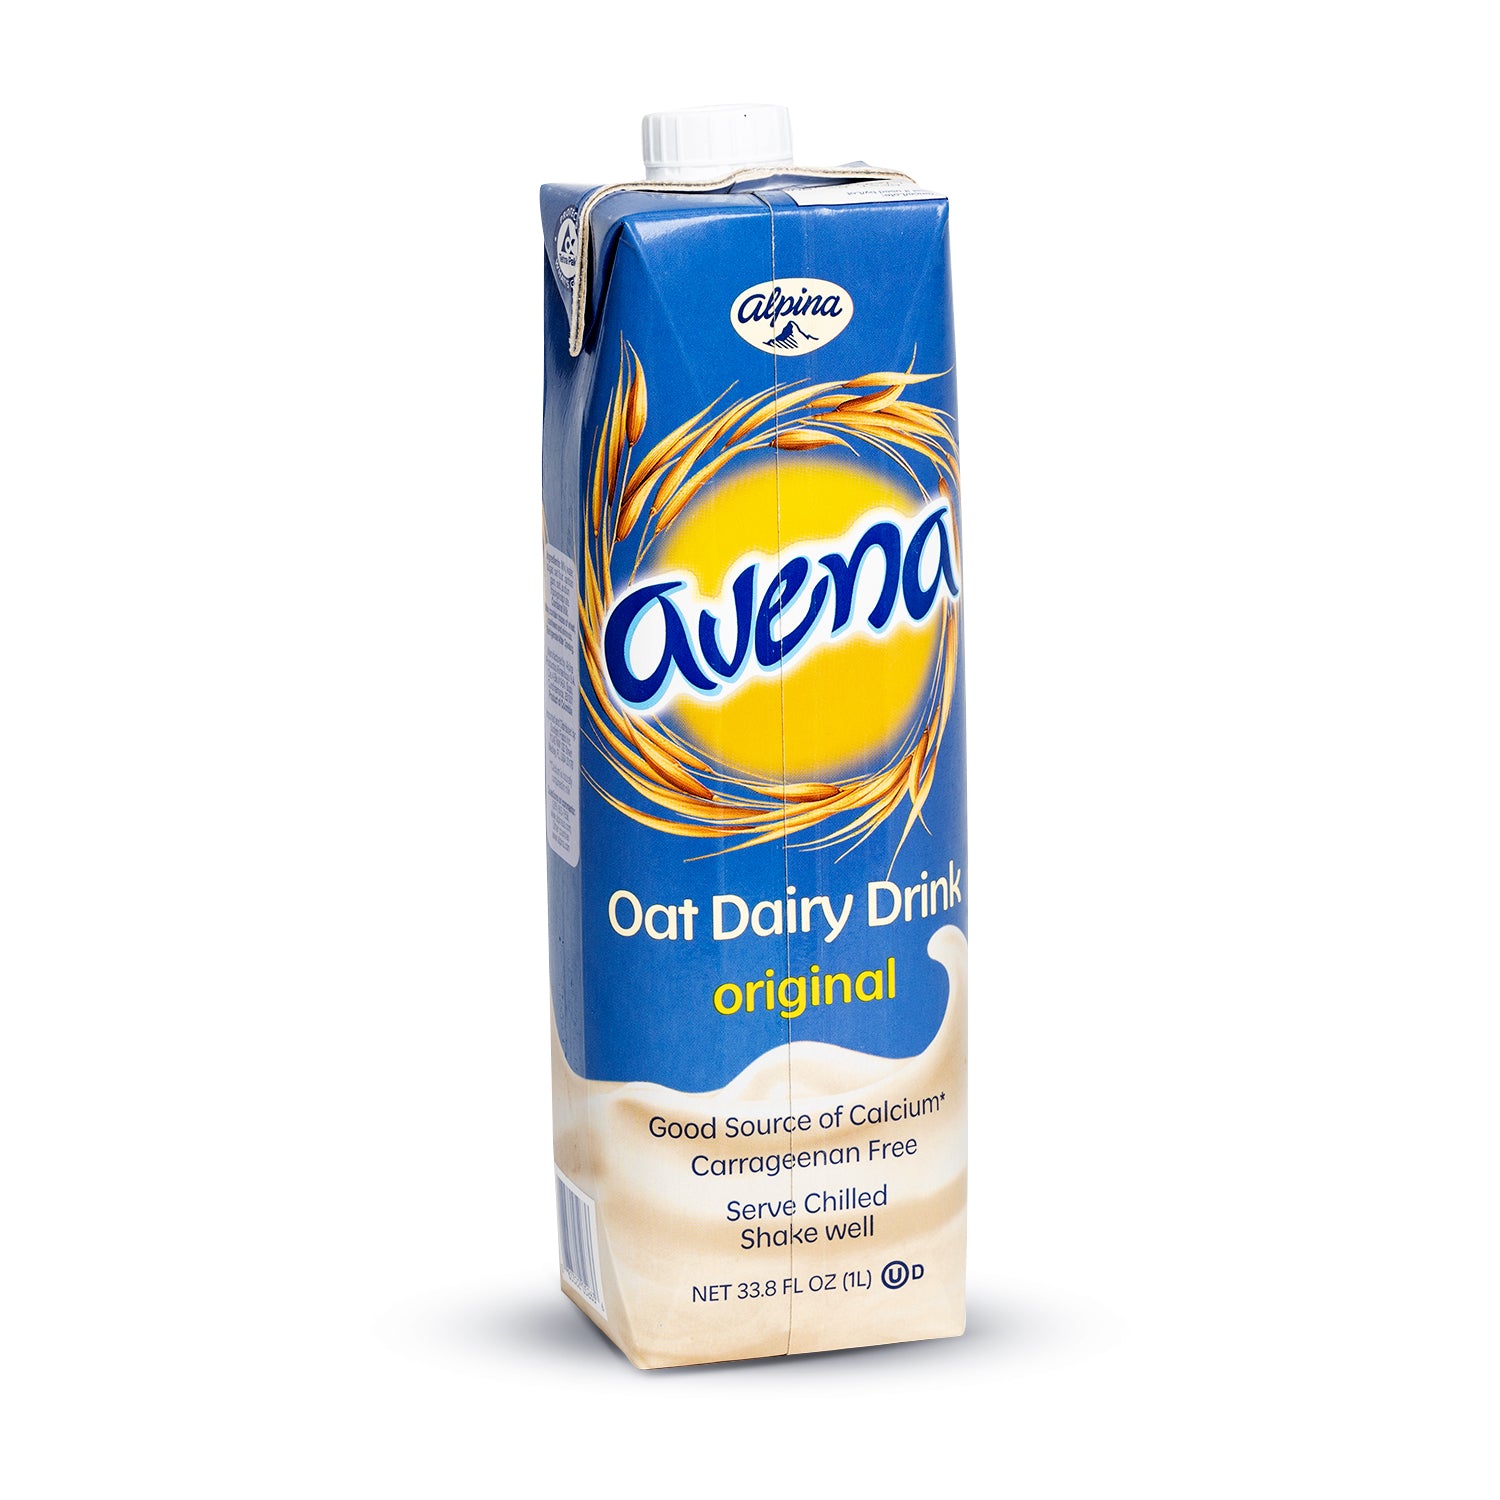 Oat Dairy Drink - Original - 33.8 FL OZ